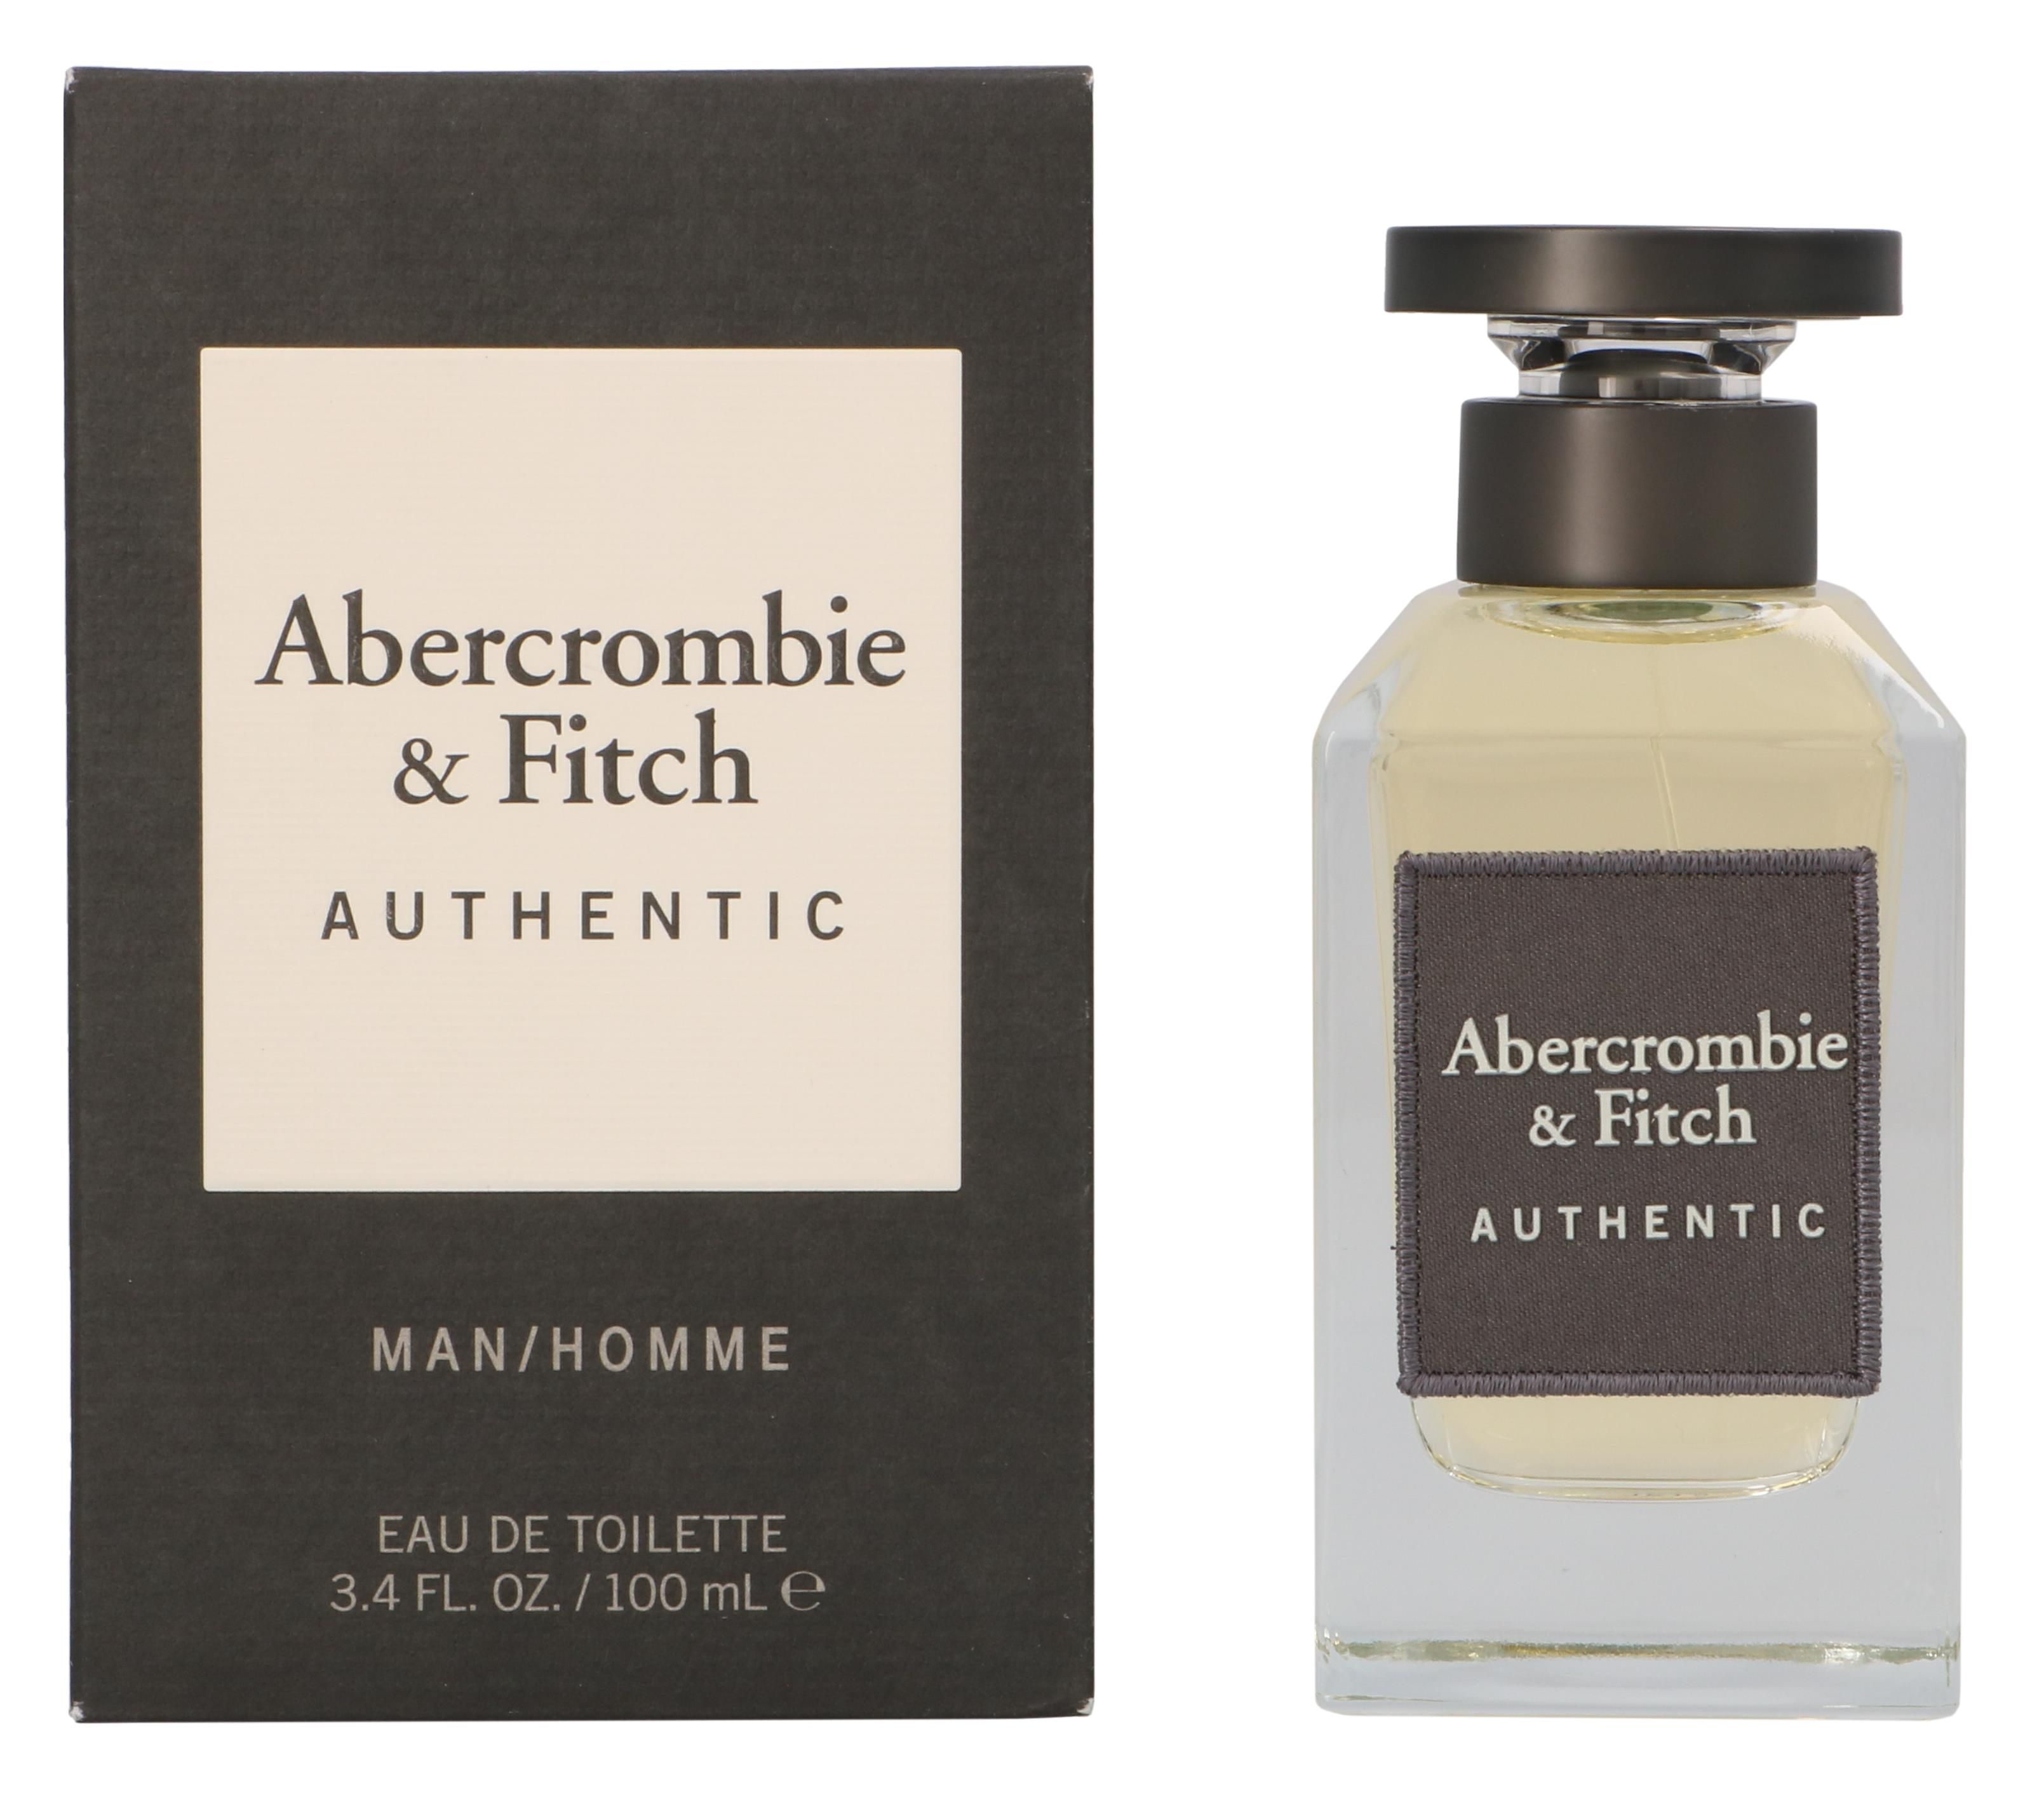 Abercrombie & Fitch Authentic Men Edt Spray 100ml